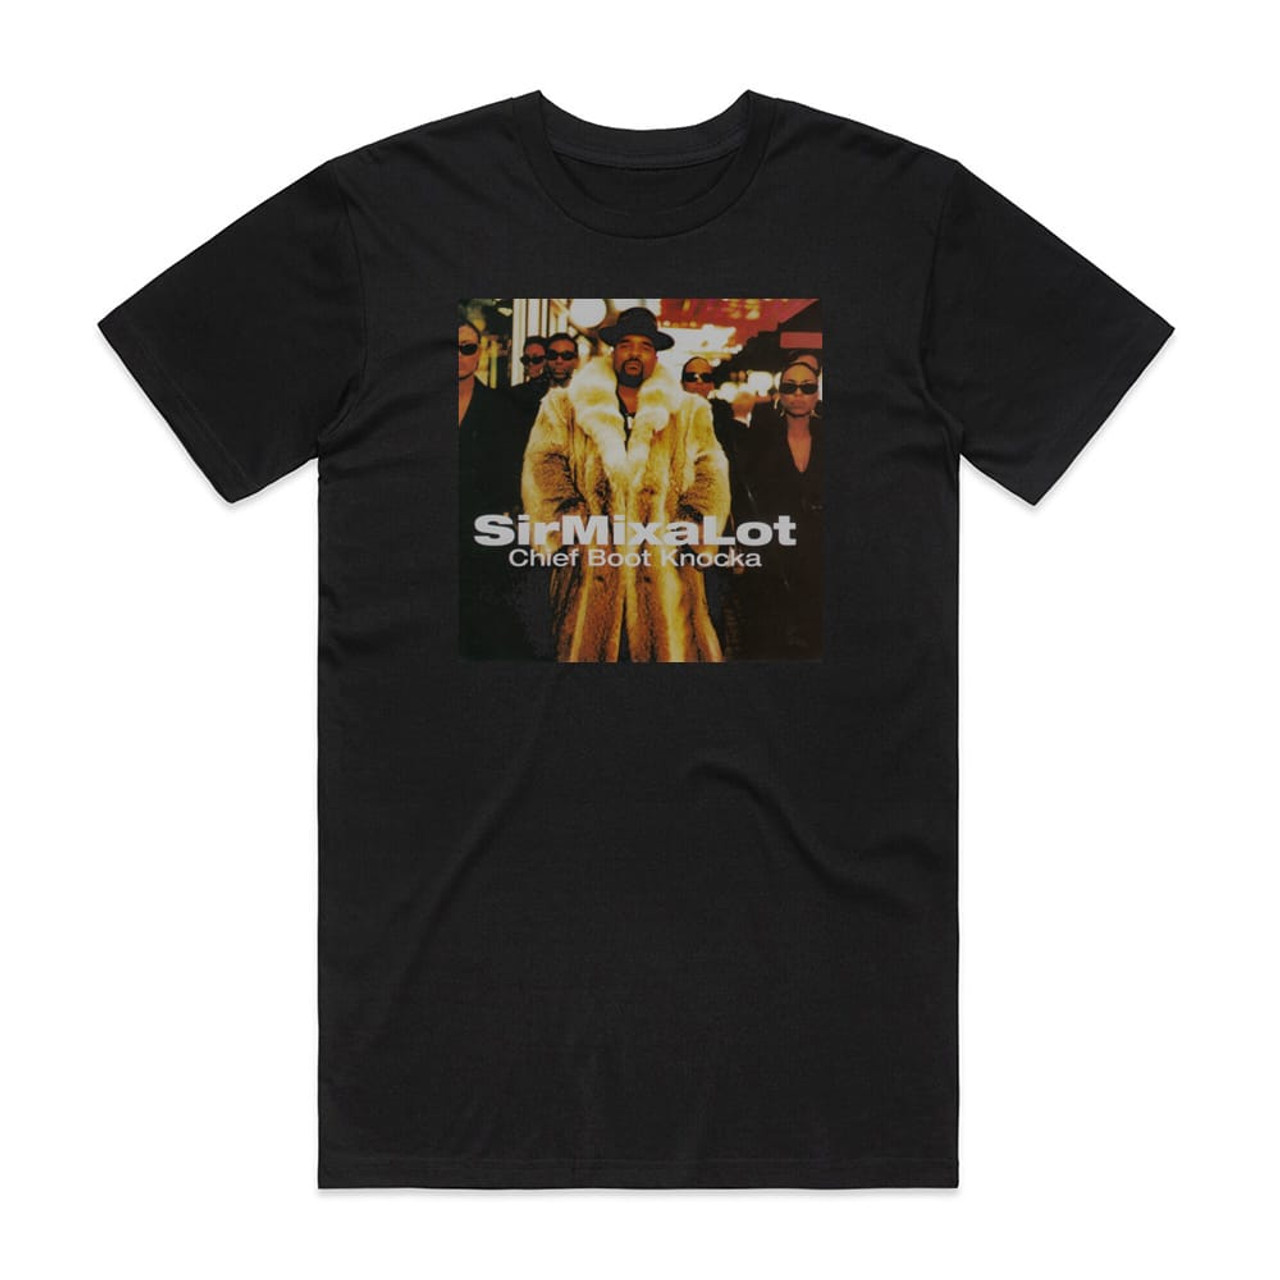 Sir Mix-A-Lot Chief Boot Knocka Album Cover T-Shirt Black